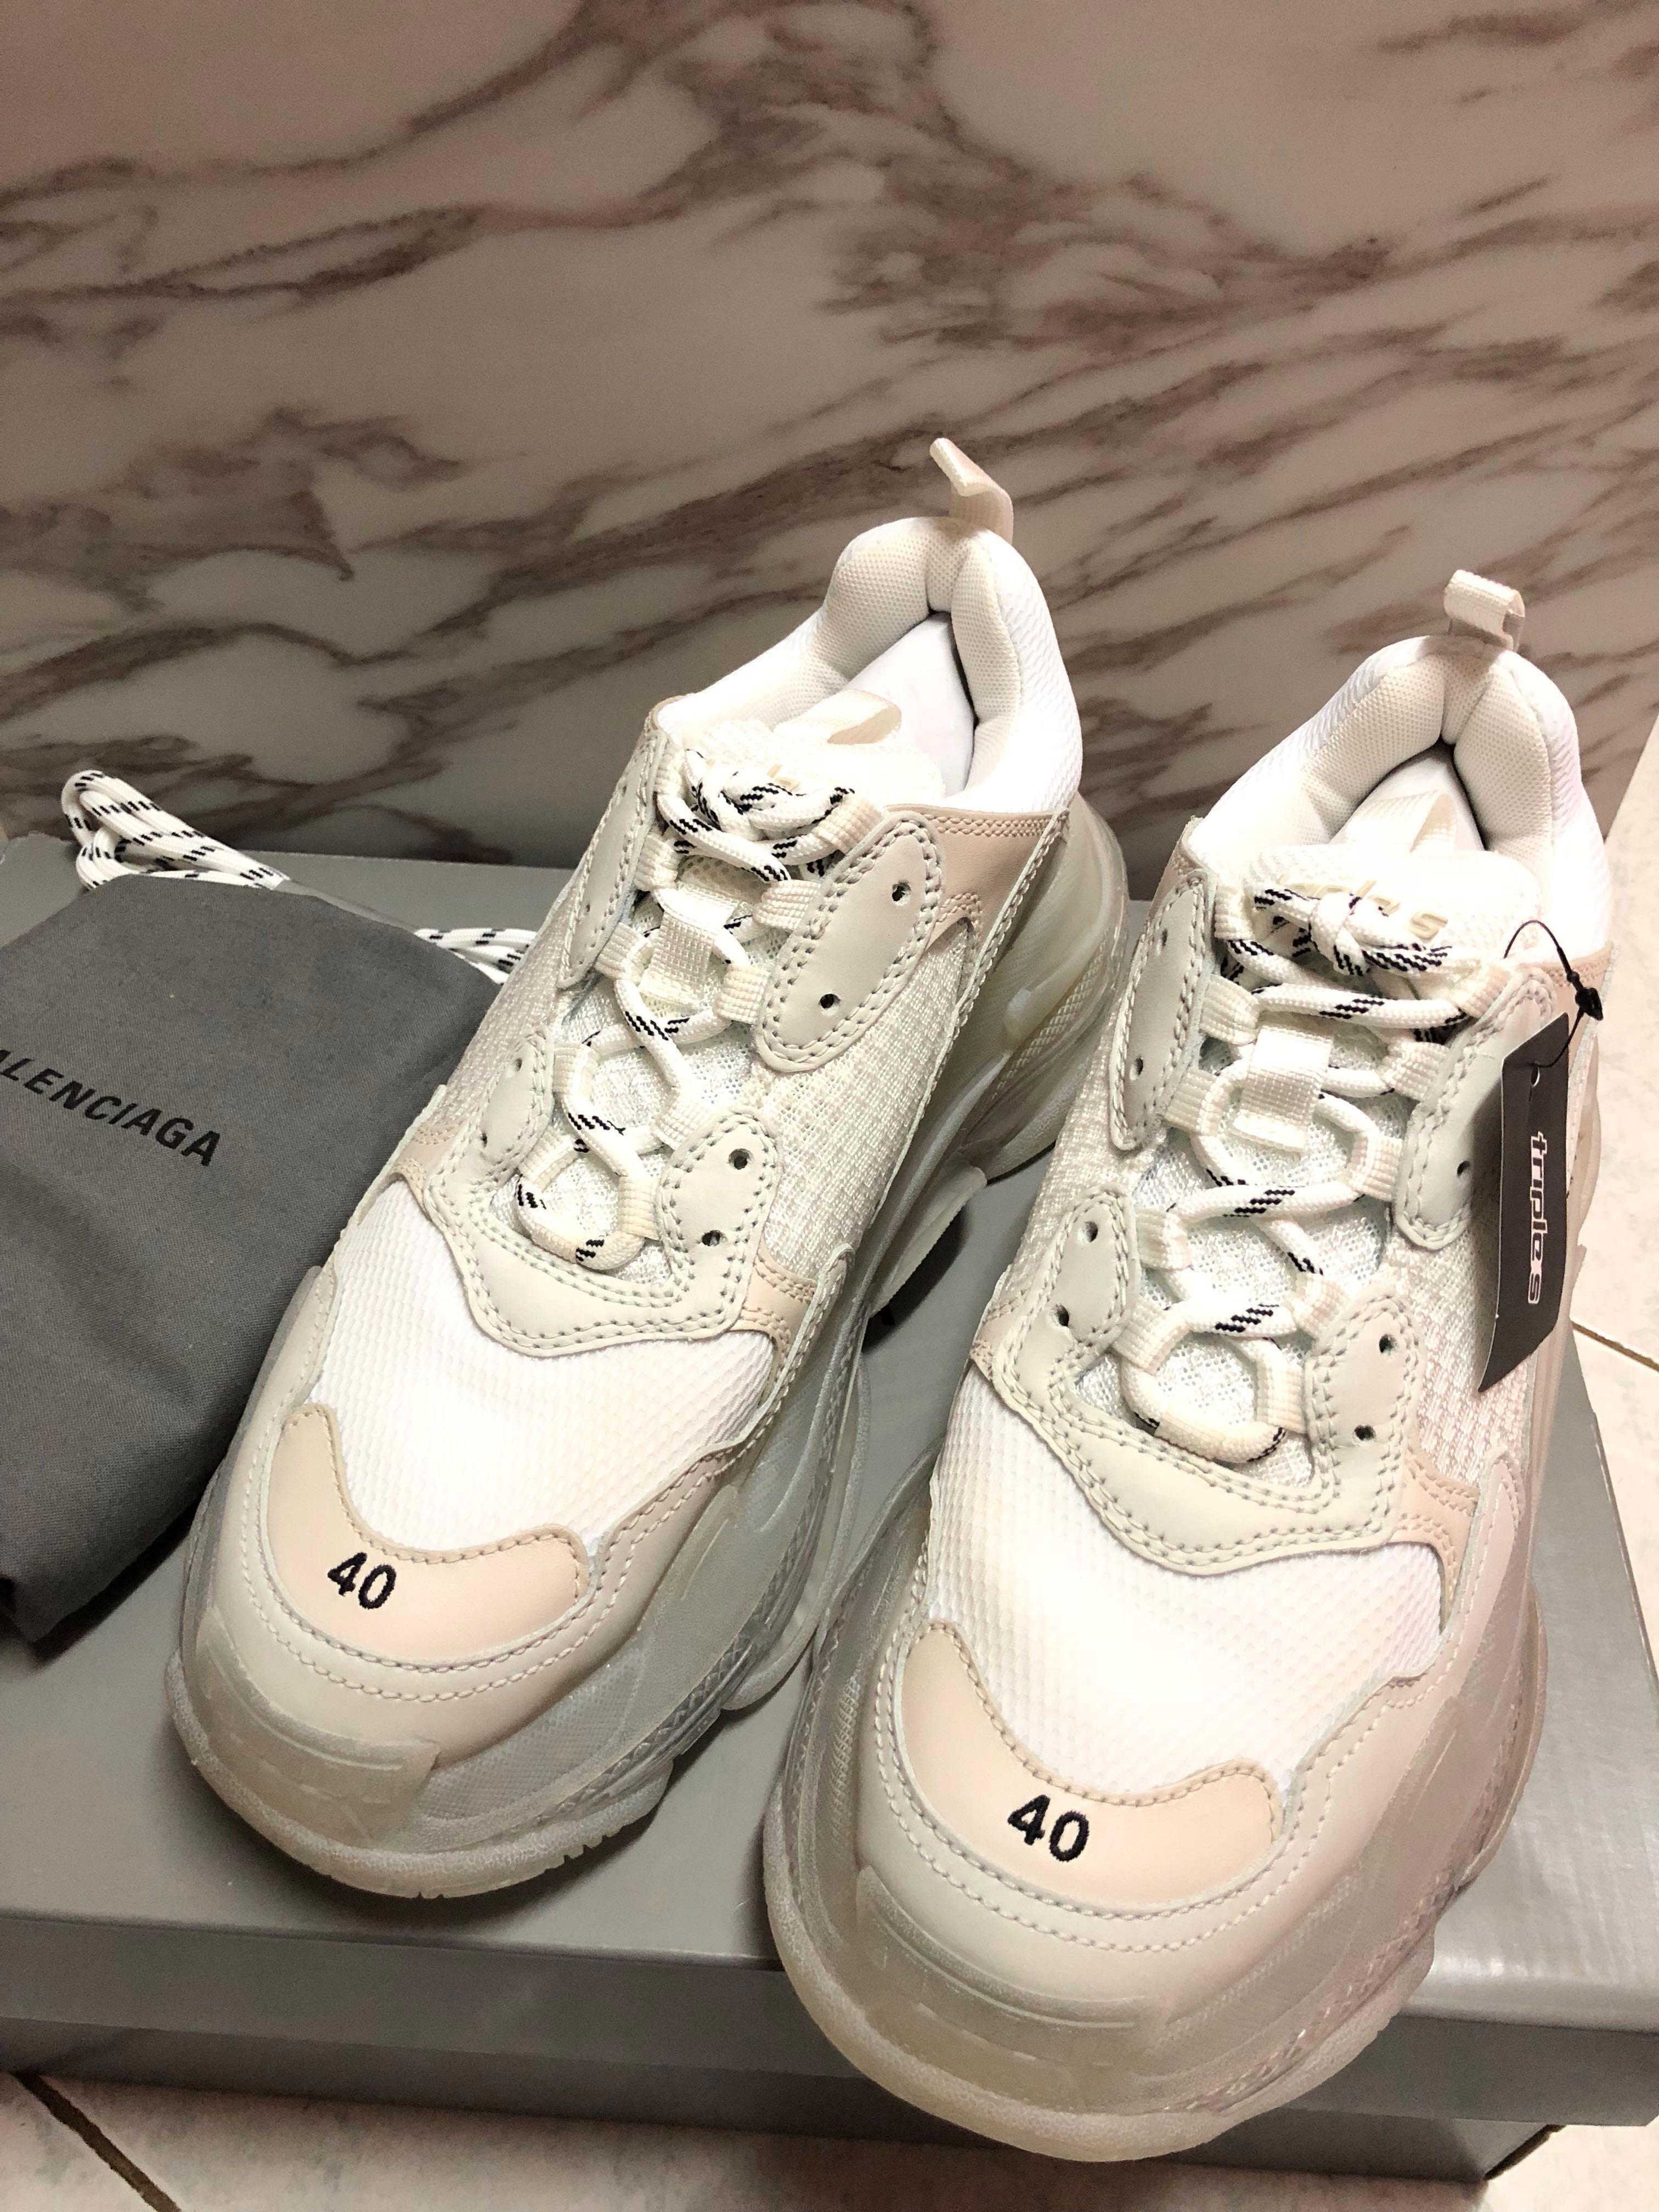 First Look At The Balenciaga Triple S 2 0 Upcoming Sneaker